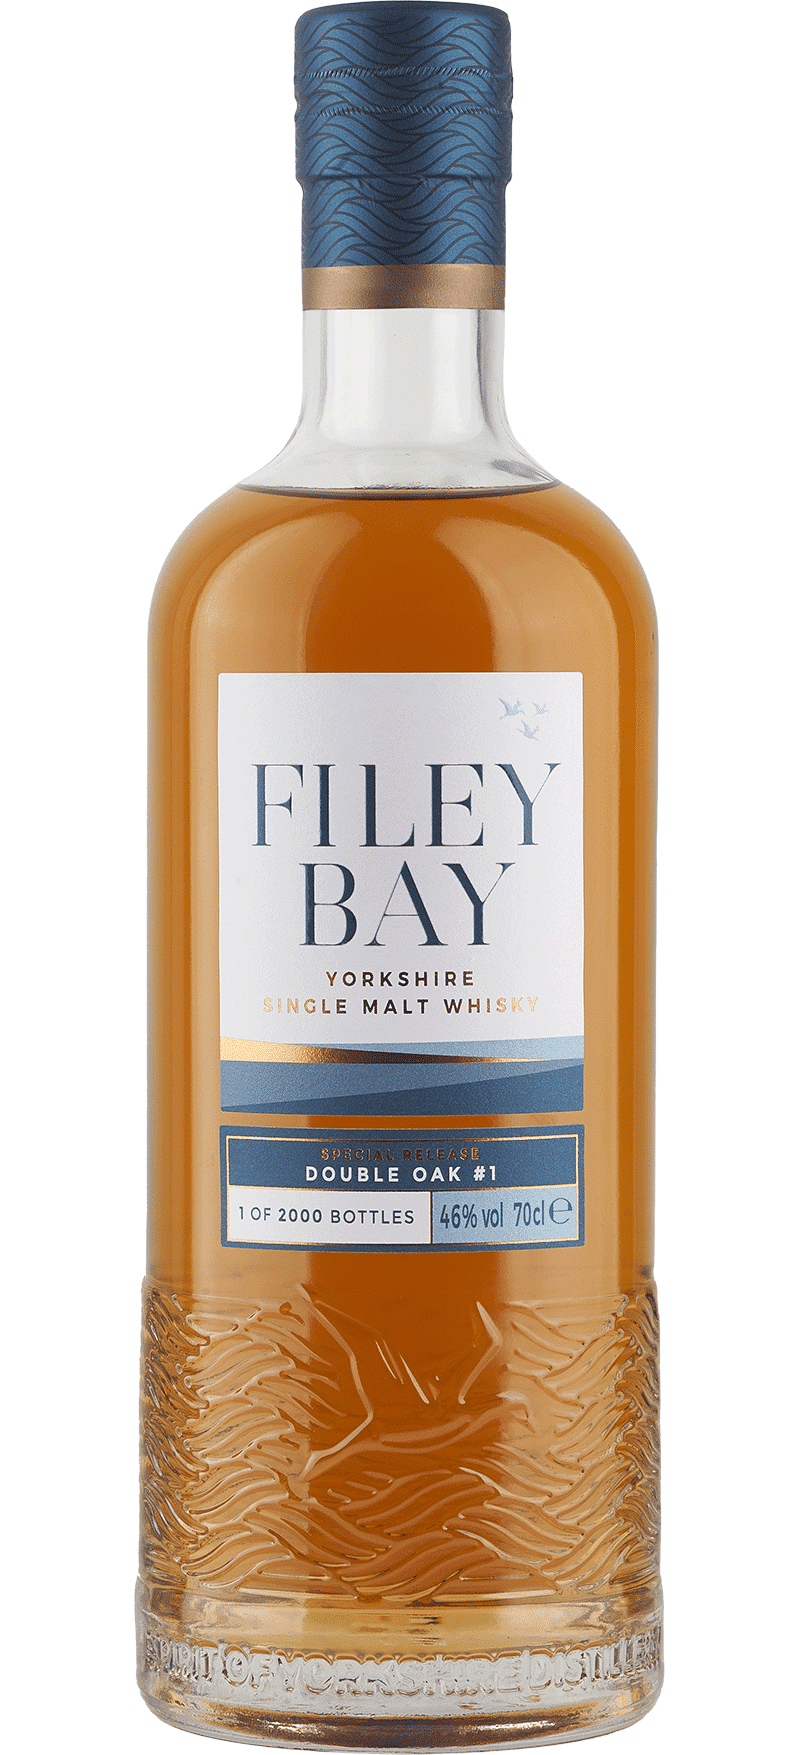 Filey Bay Double Oak whisky